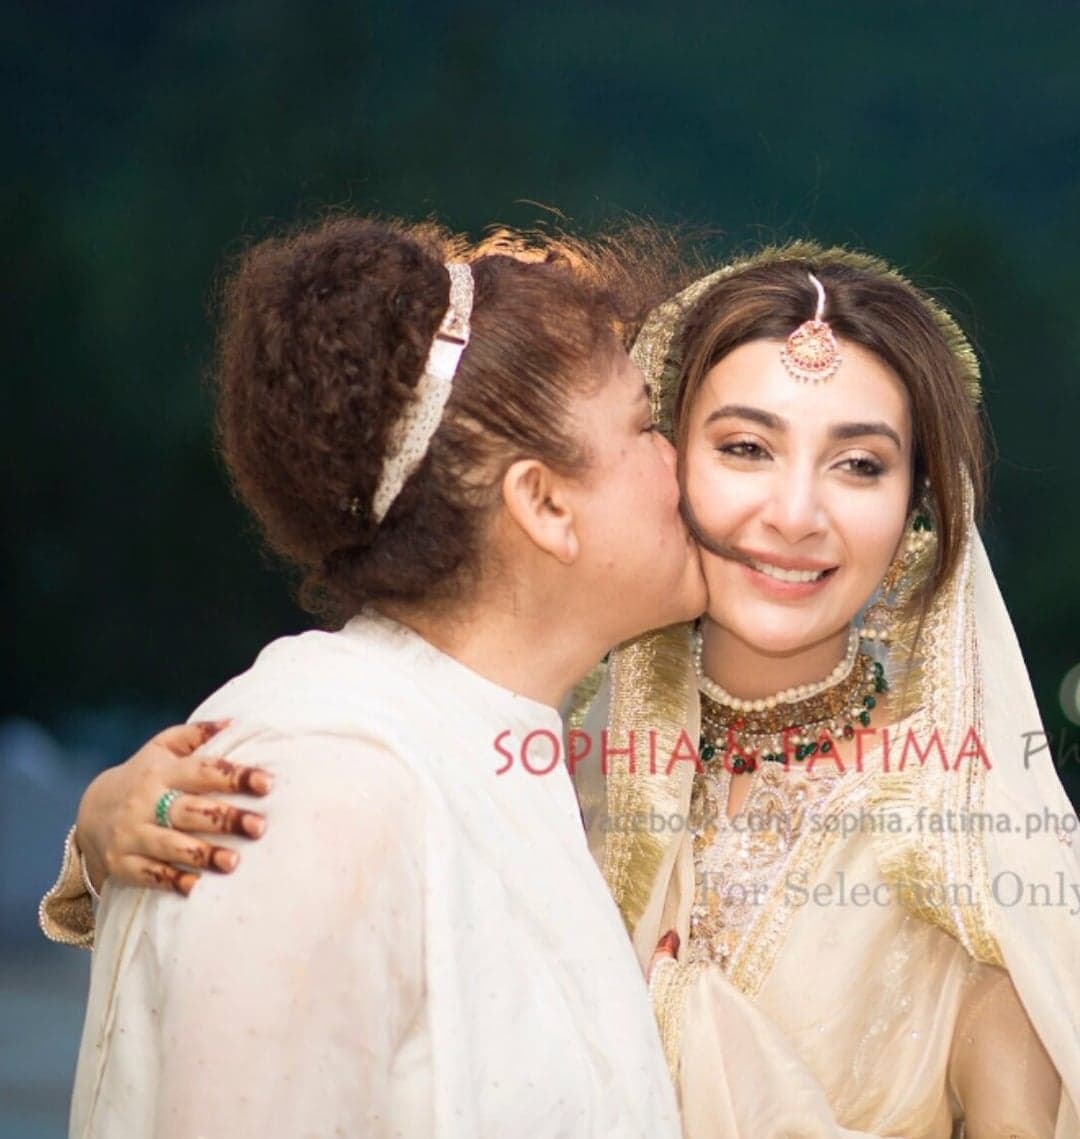 Beautiful Mehndi Designs of Pakistani Celebrity Brides